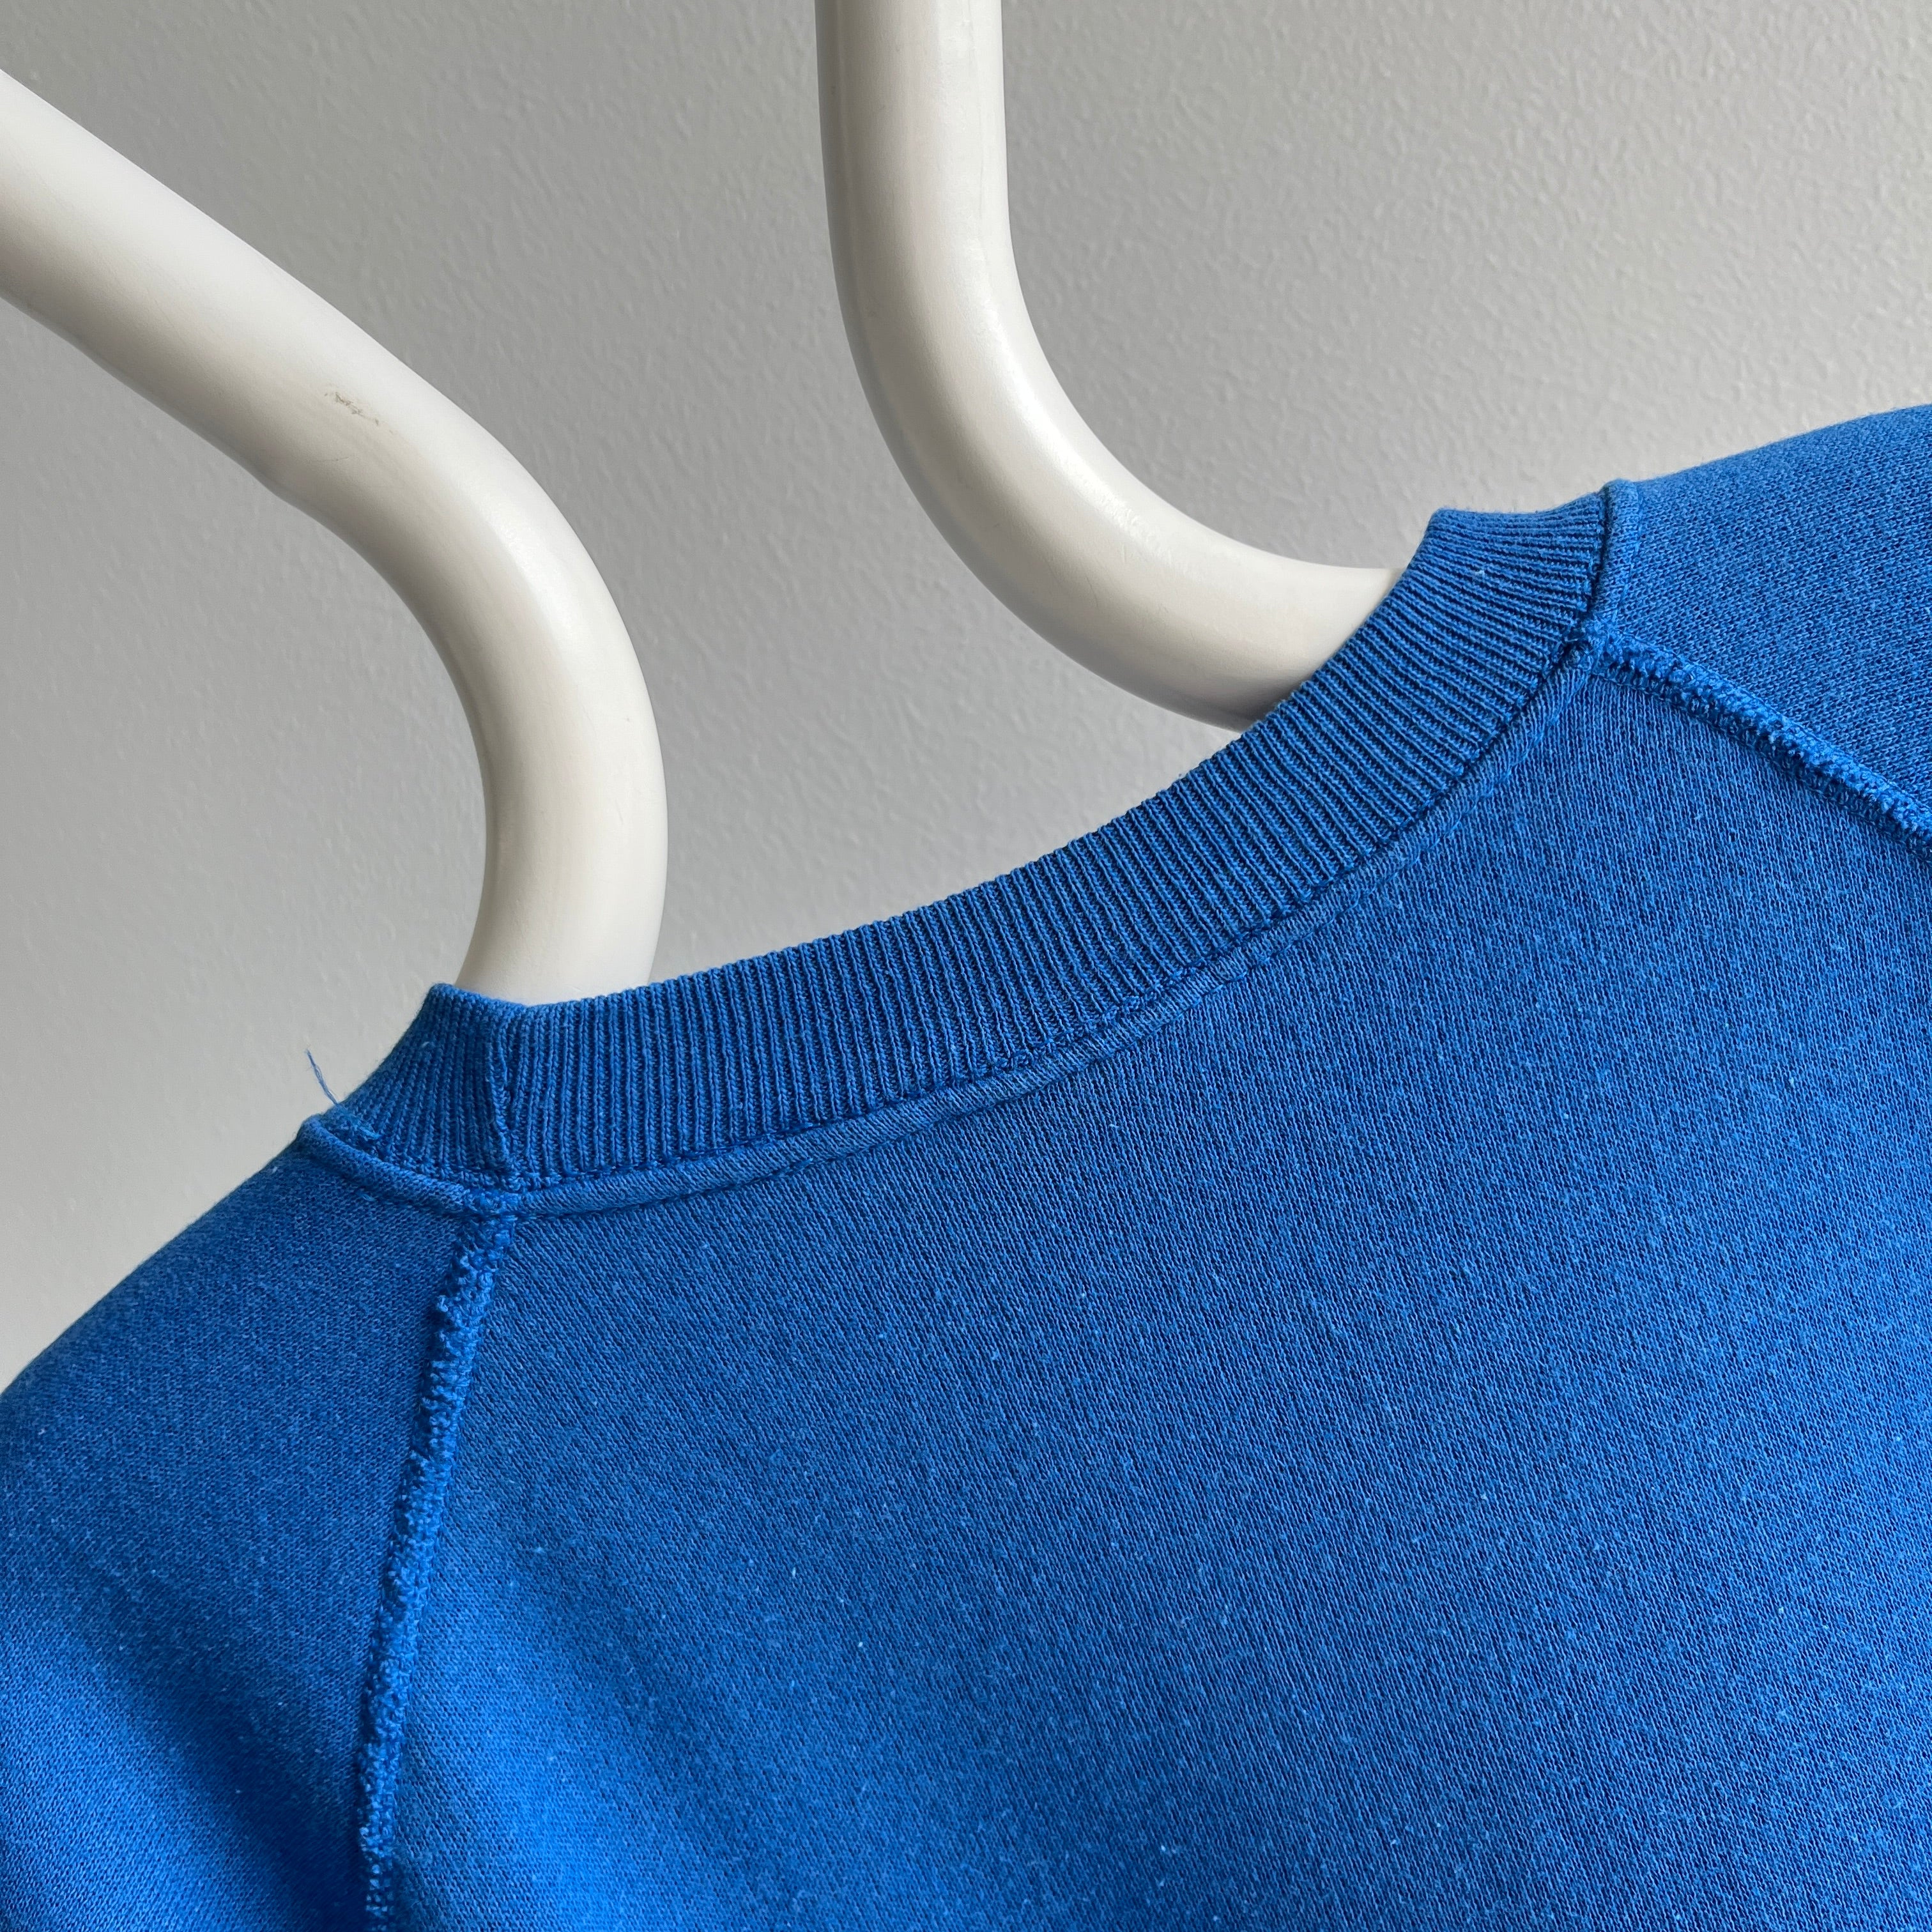 1980s Royal Blue Blank Sweatshirt by Hanes